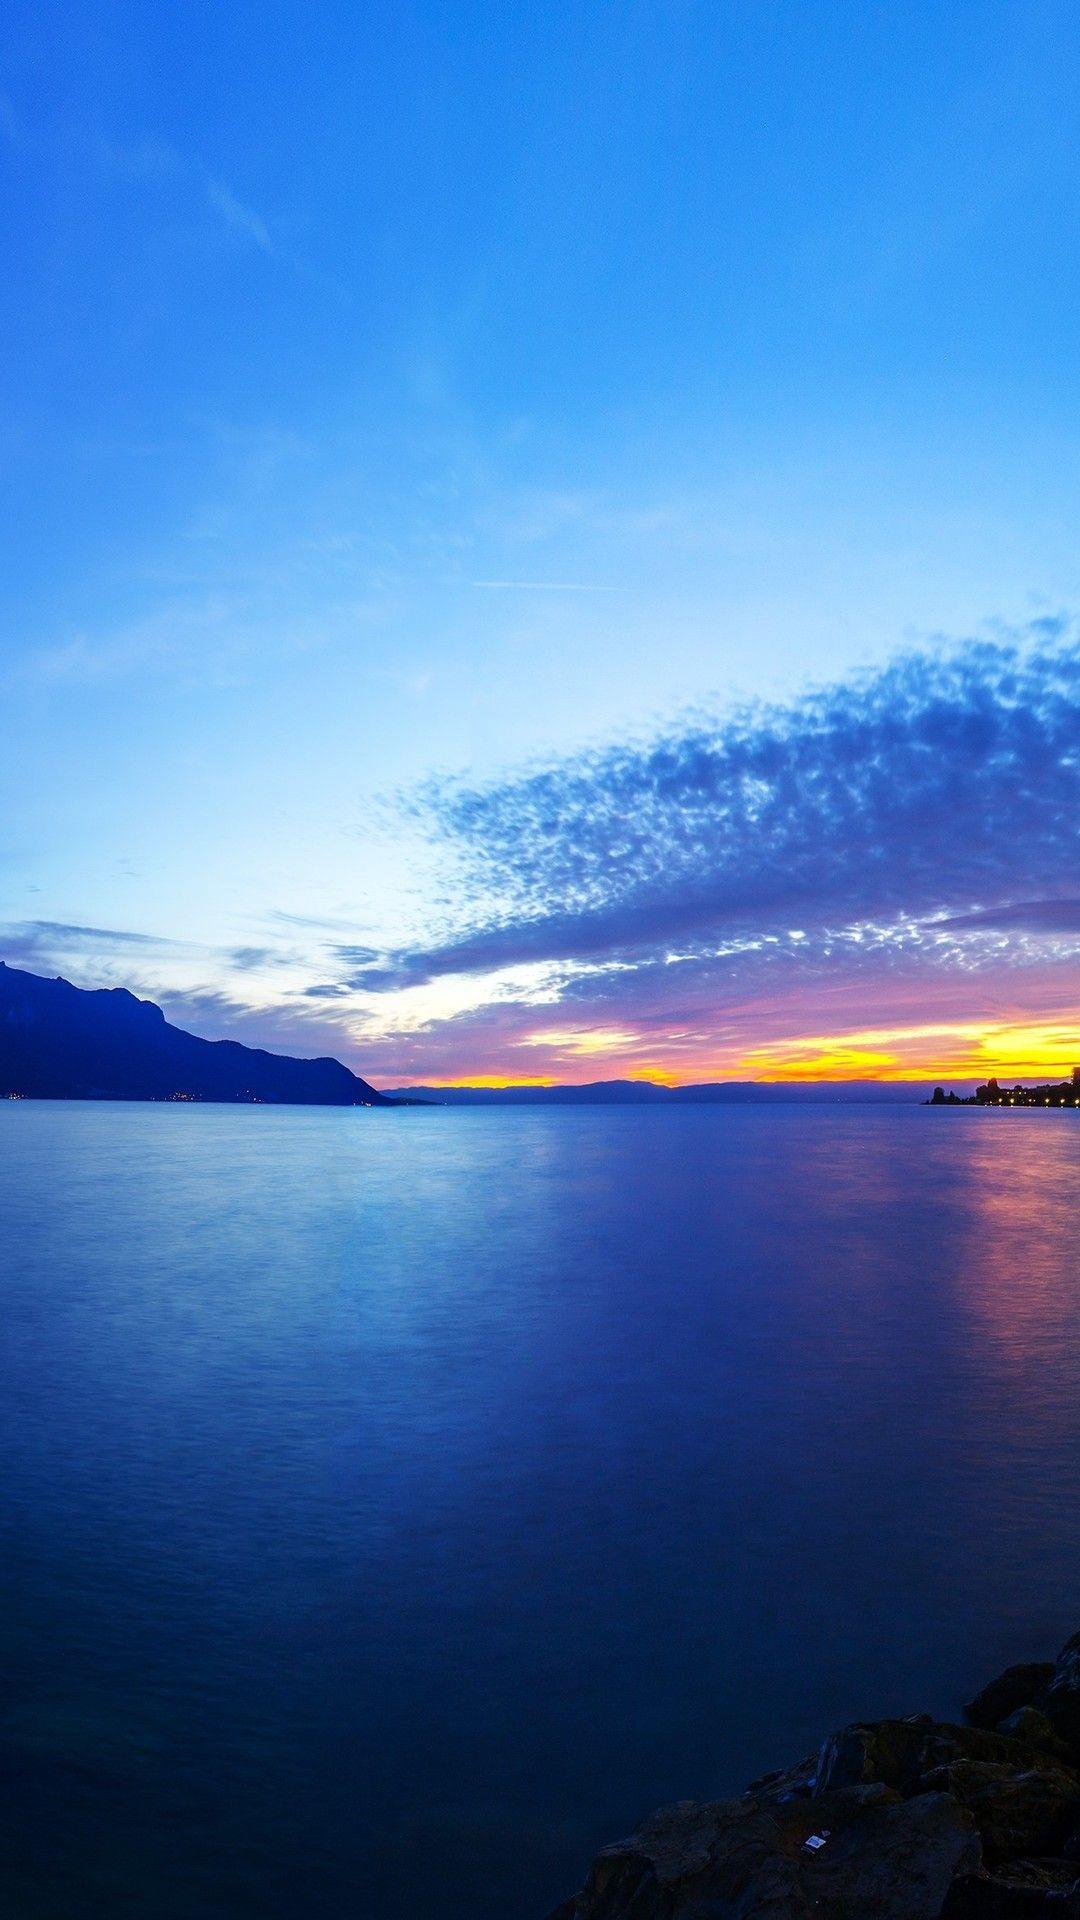 Geneva Lake iPhone 6s, 6 Plus, Pixel xl , One Plus 3t, 5